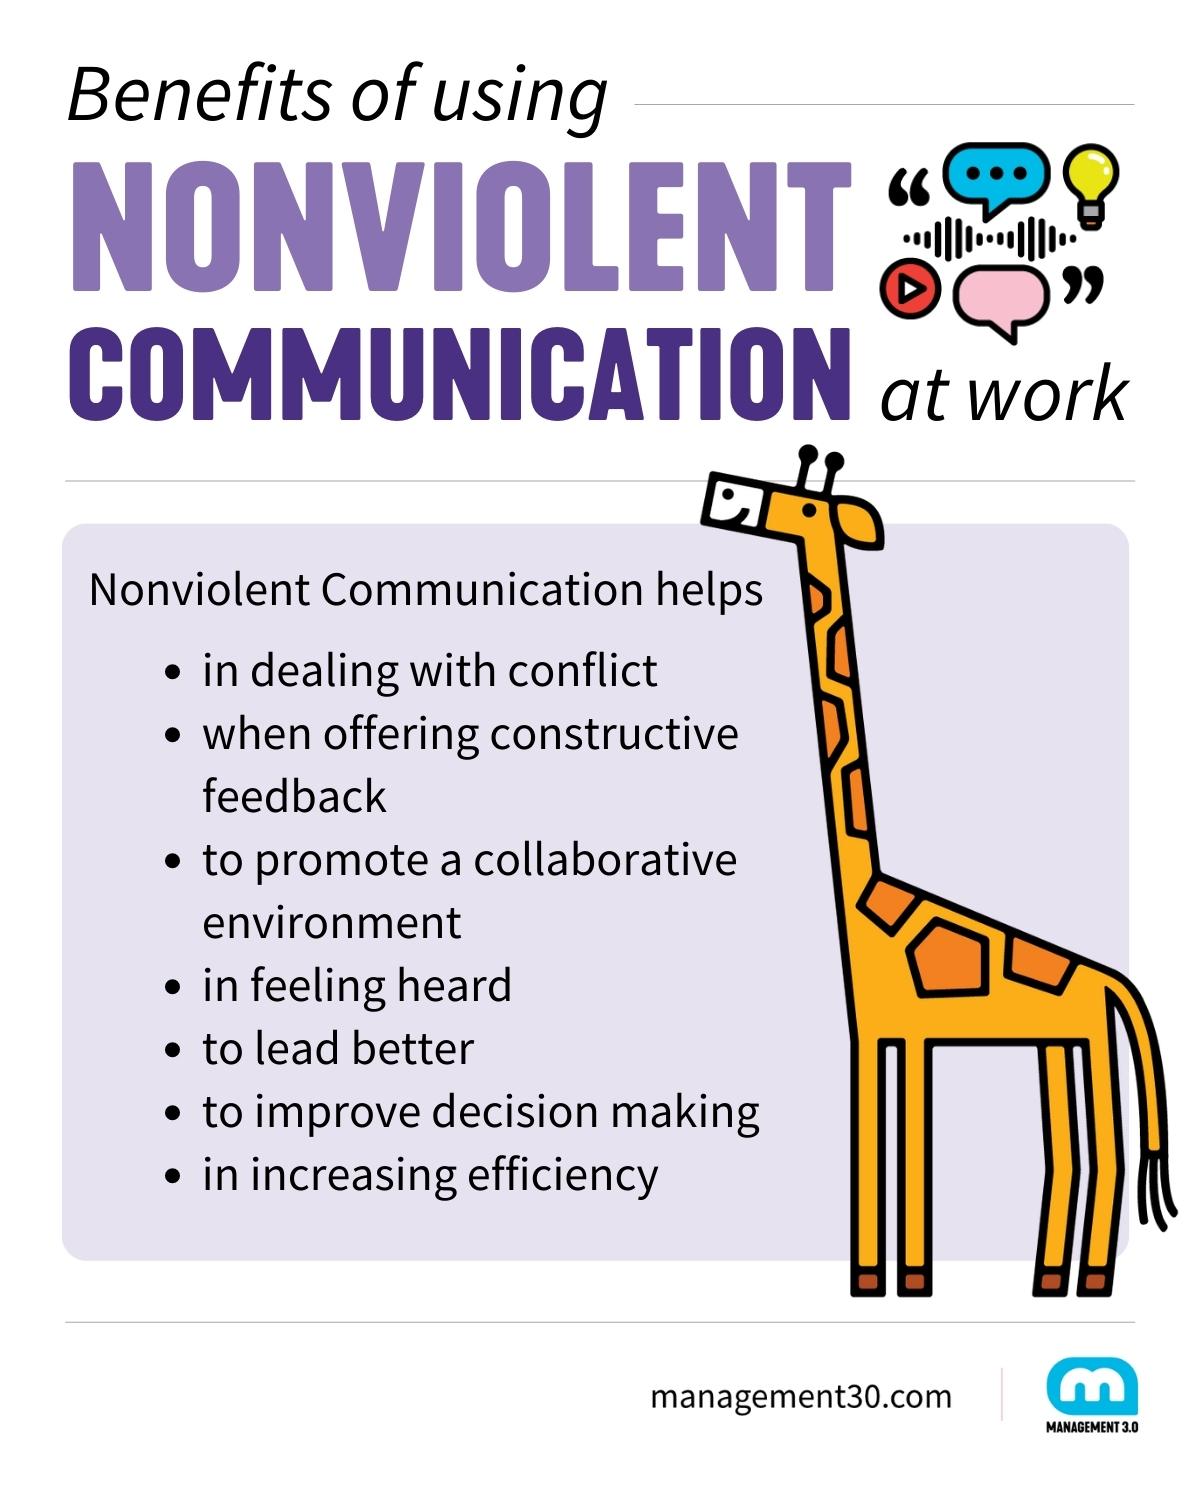 NVC at Work: Benefits